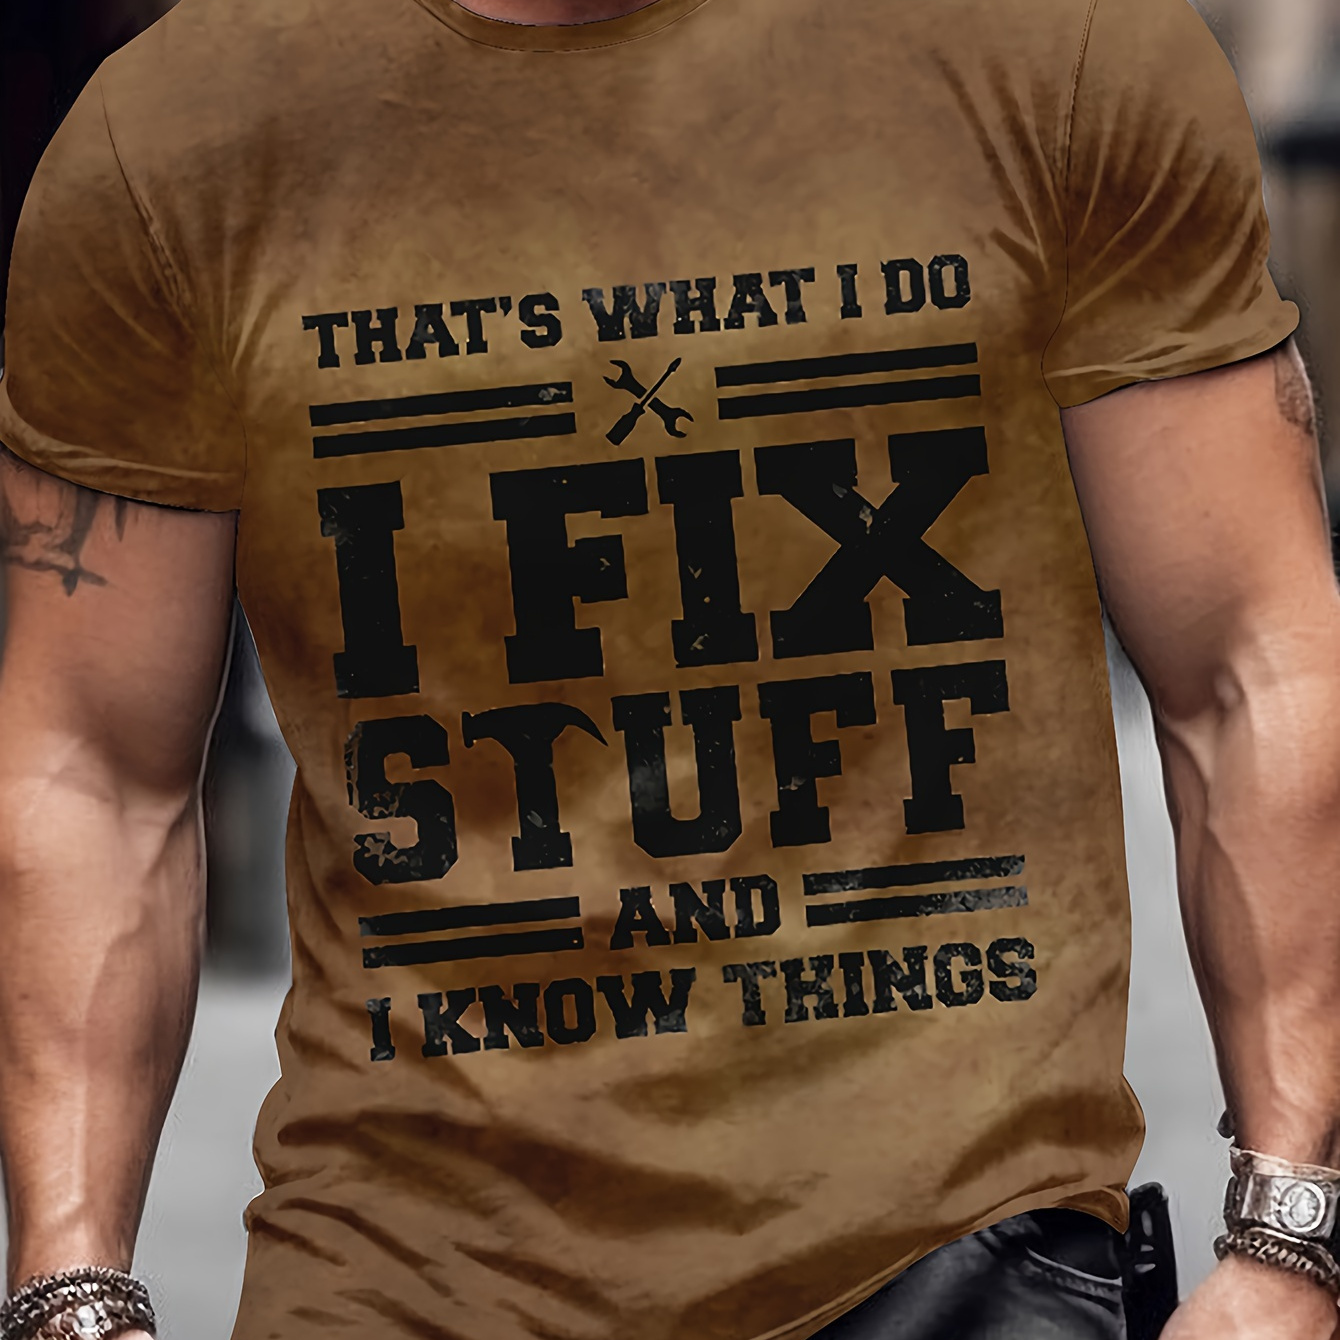 

Fix Stuff Slogan 3d Digital Pattern Print Graphic Men's T-shirts, Causal Tees, Short Sleeves Comfortable Pullover Tops, Men's Summer Clothing